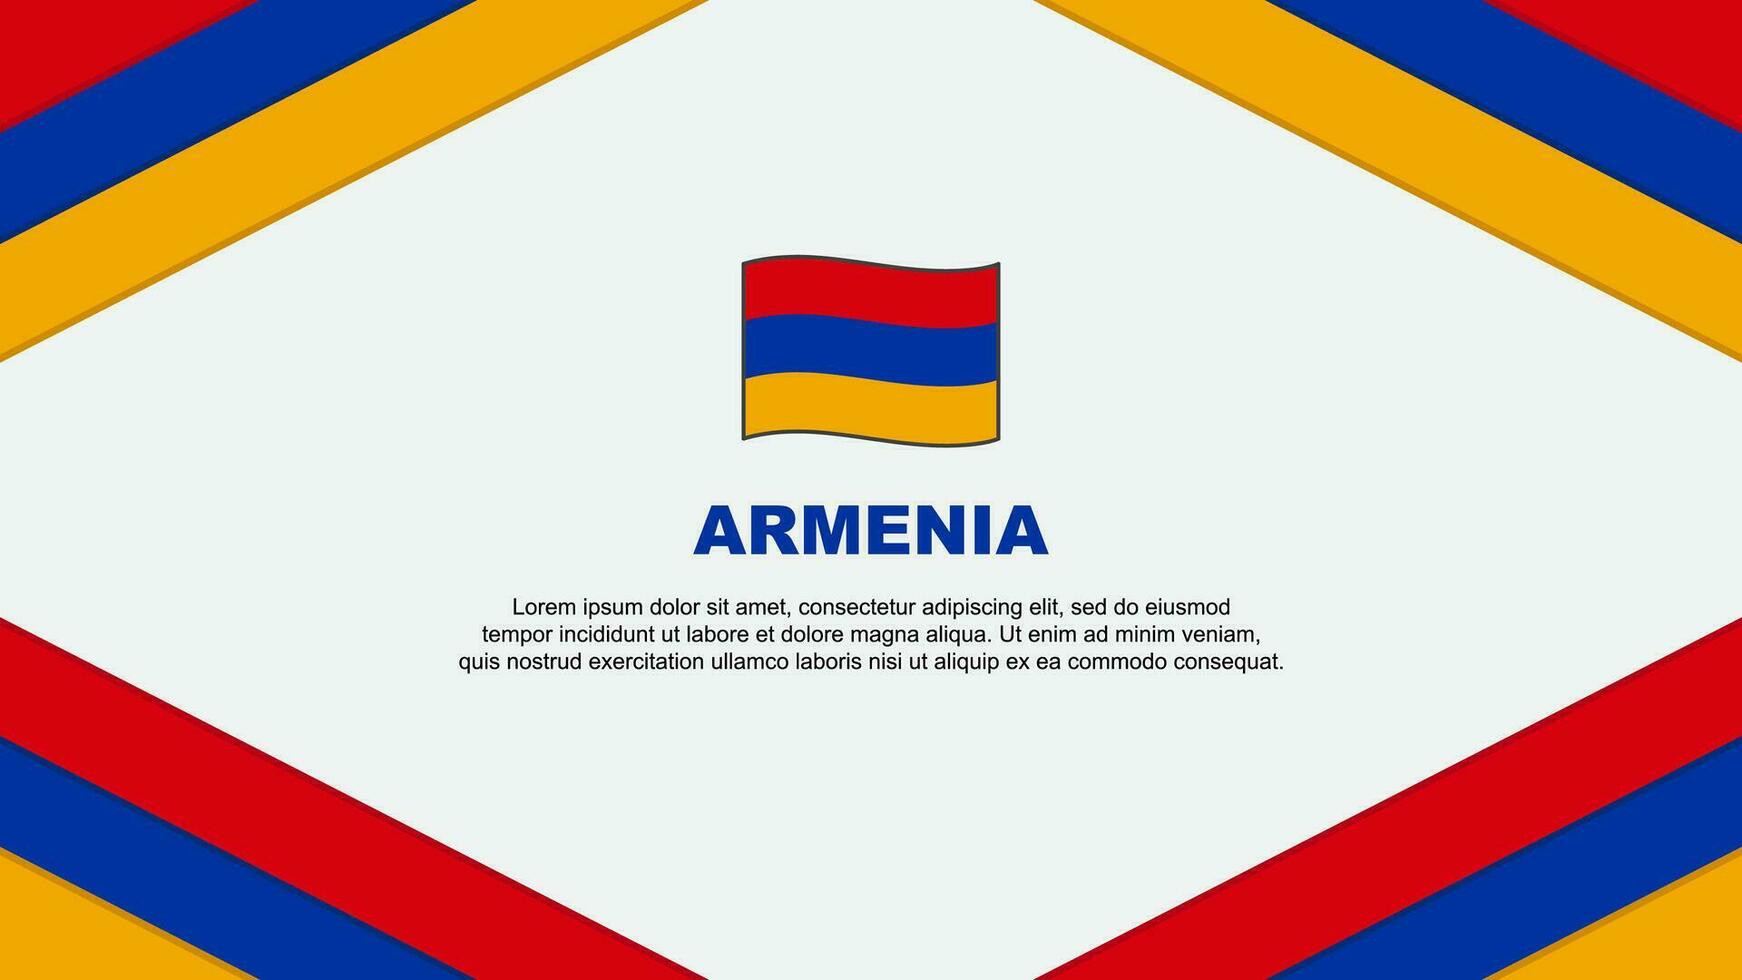 Armenia Flag Abstract Background Design Template. Armenia Independence Day Banner Cartoon Vector Illustration. Armenia Template